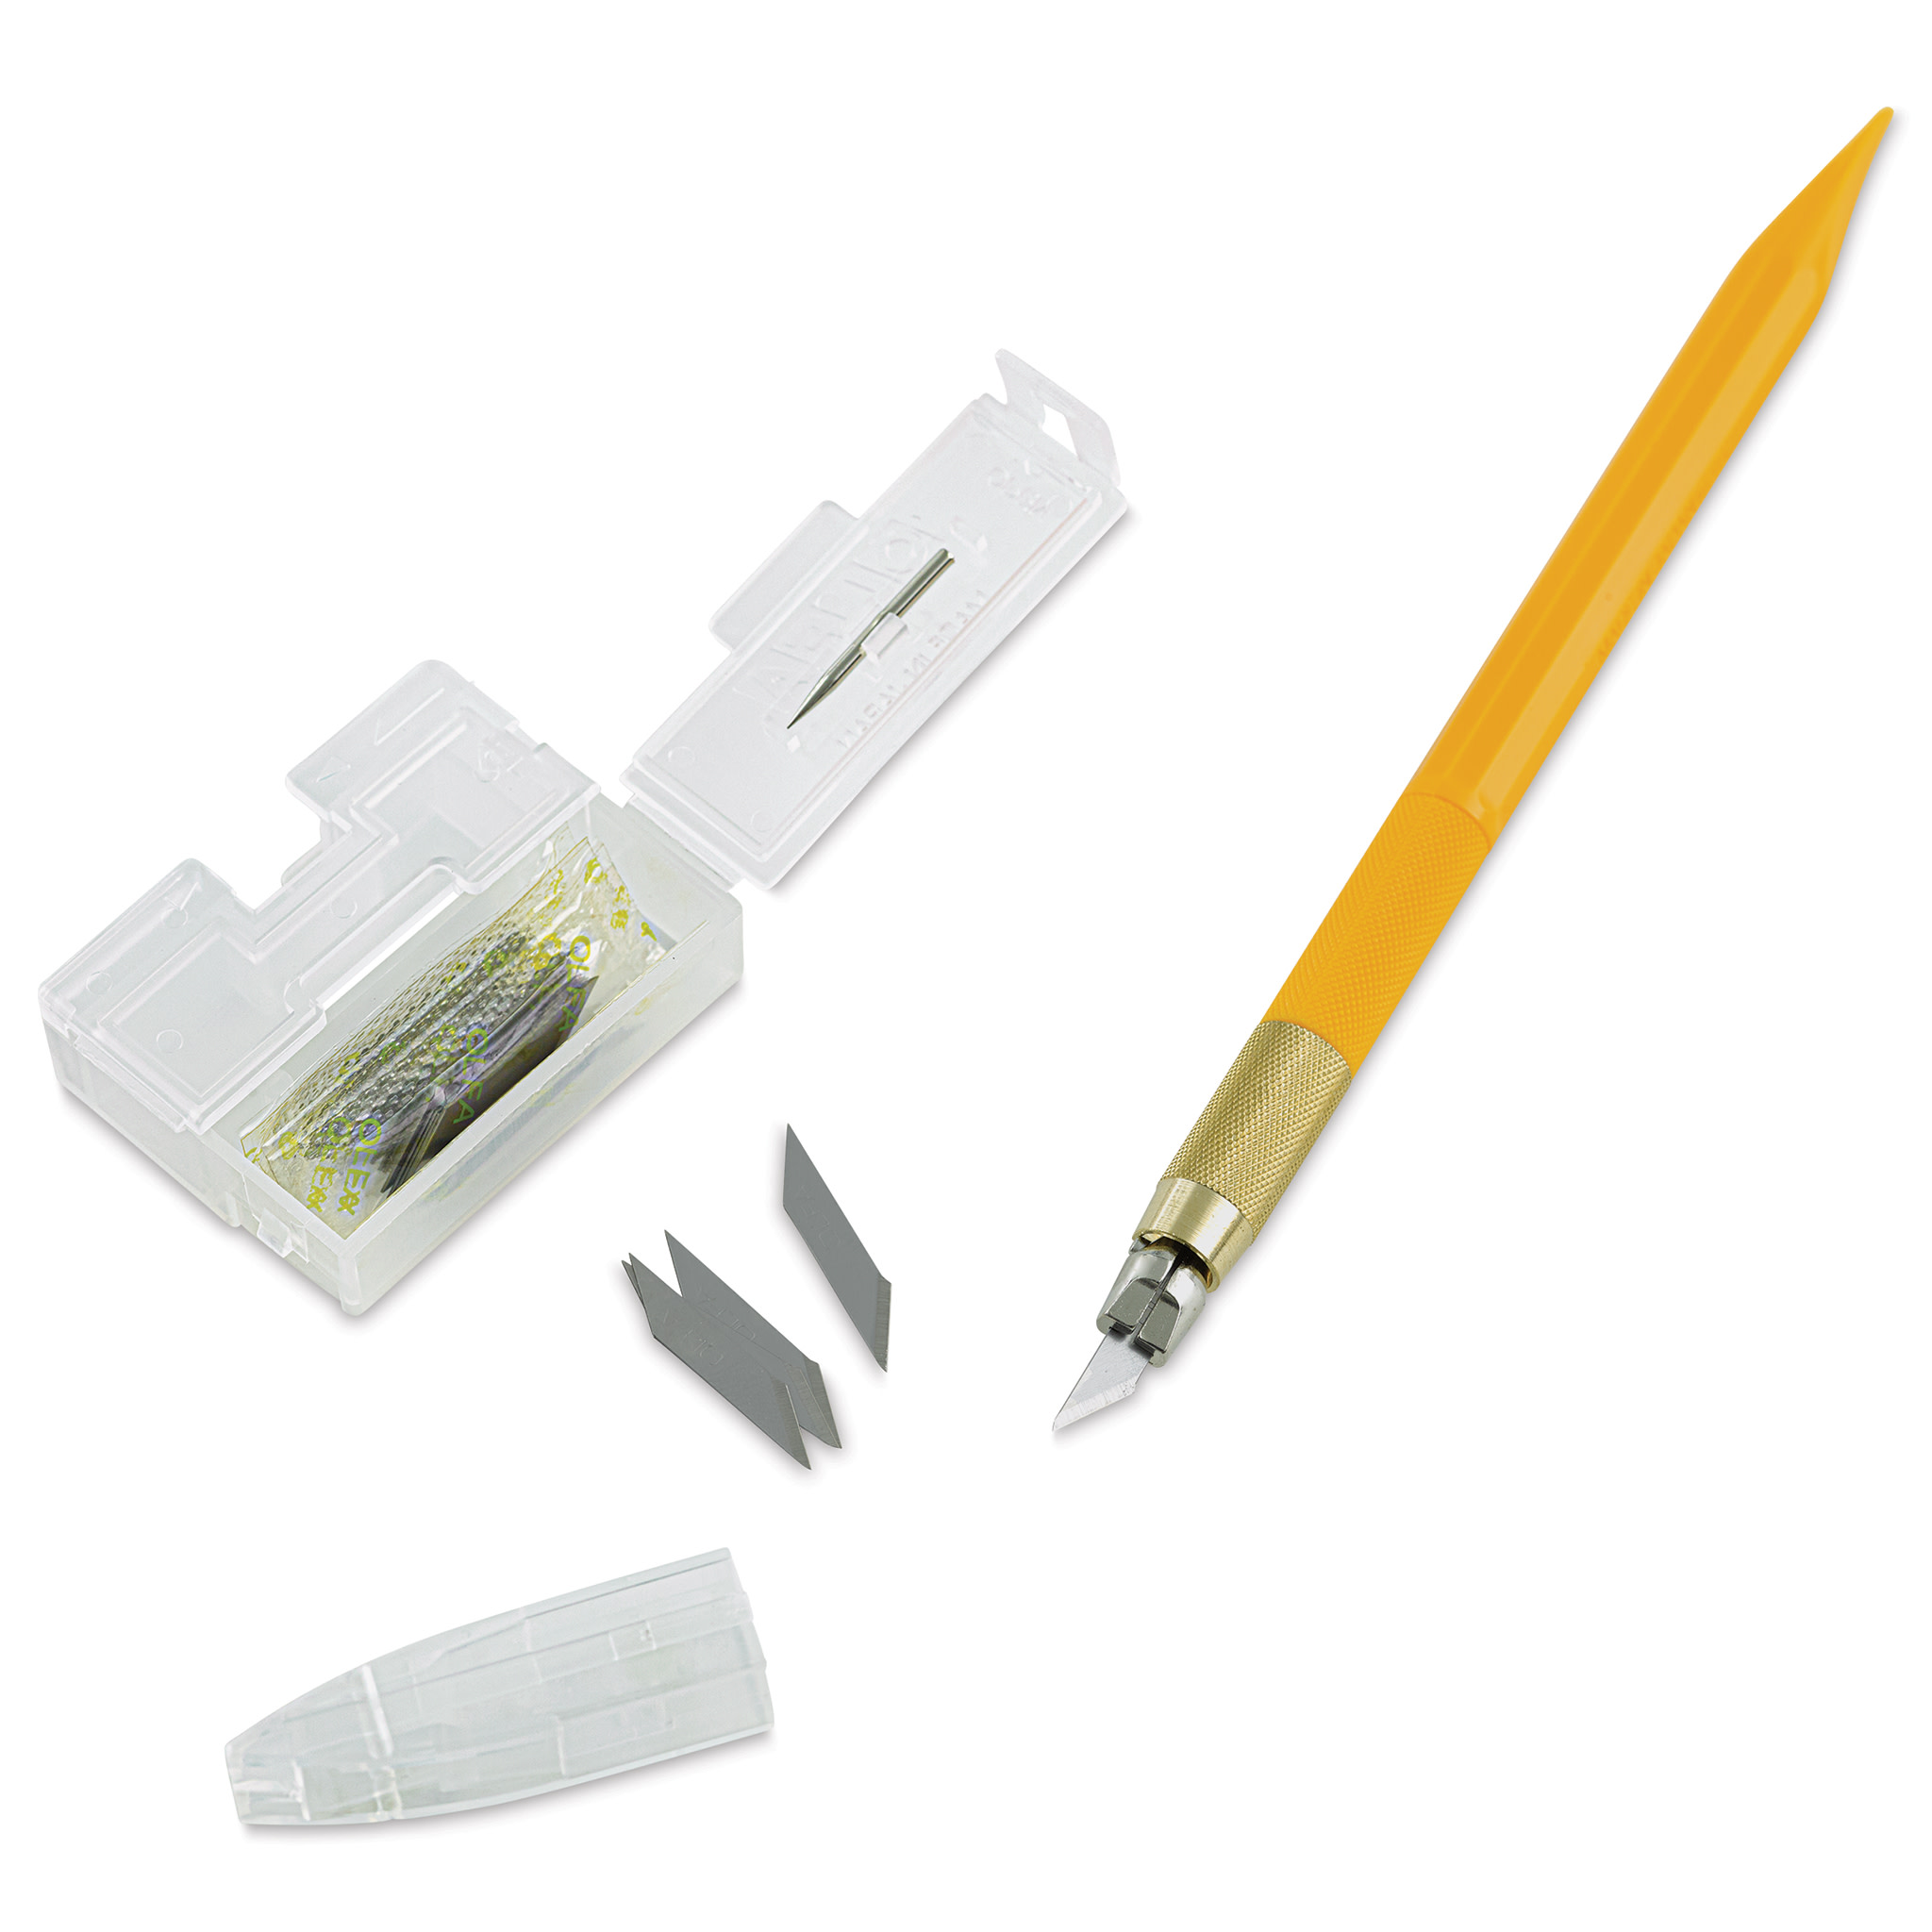 Olfa High Designer Graphic Art Knife - Precision Hobby Craft Knife Kit (1 Knife, 30 Blades, 1 Needle)